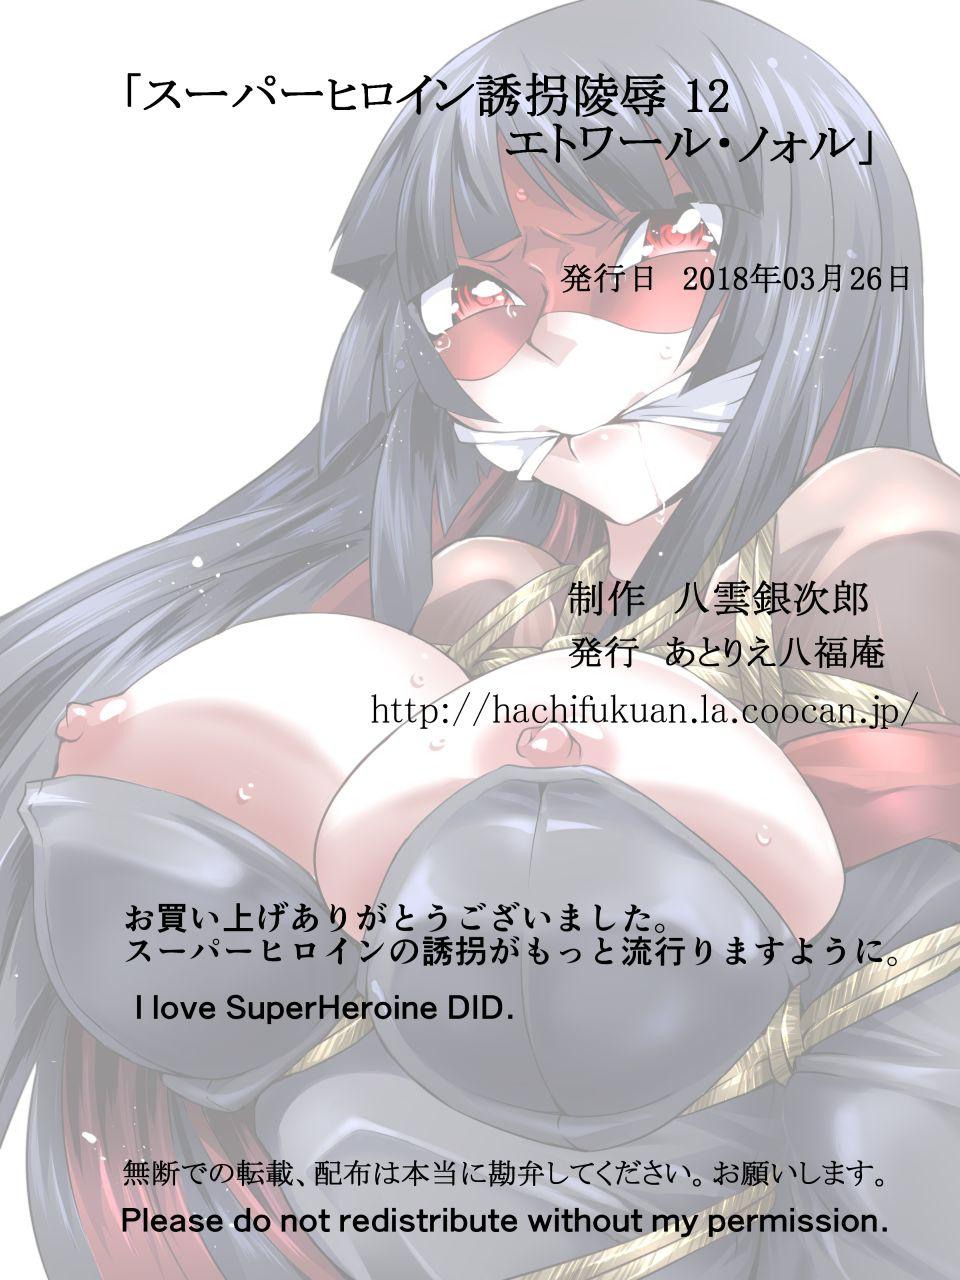 [Atelier Hachifukuan] Superheroine Yuukai Ryoujoku 12 - Superheroine in Distress - Etoile Nol 38